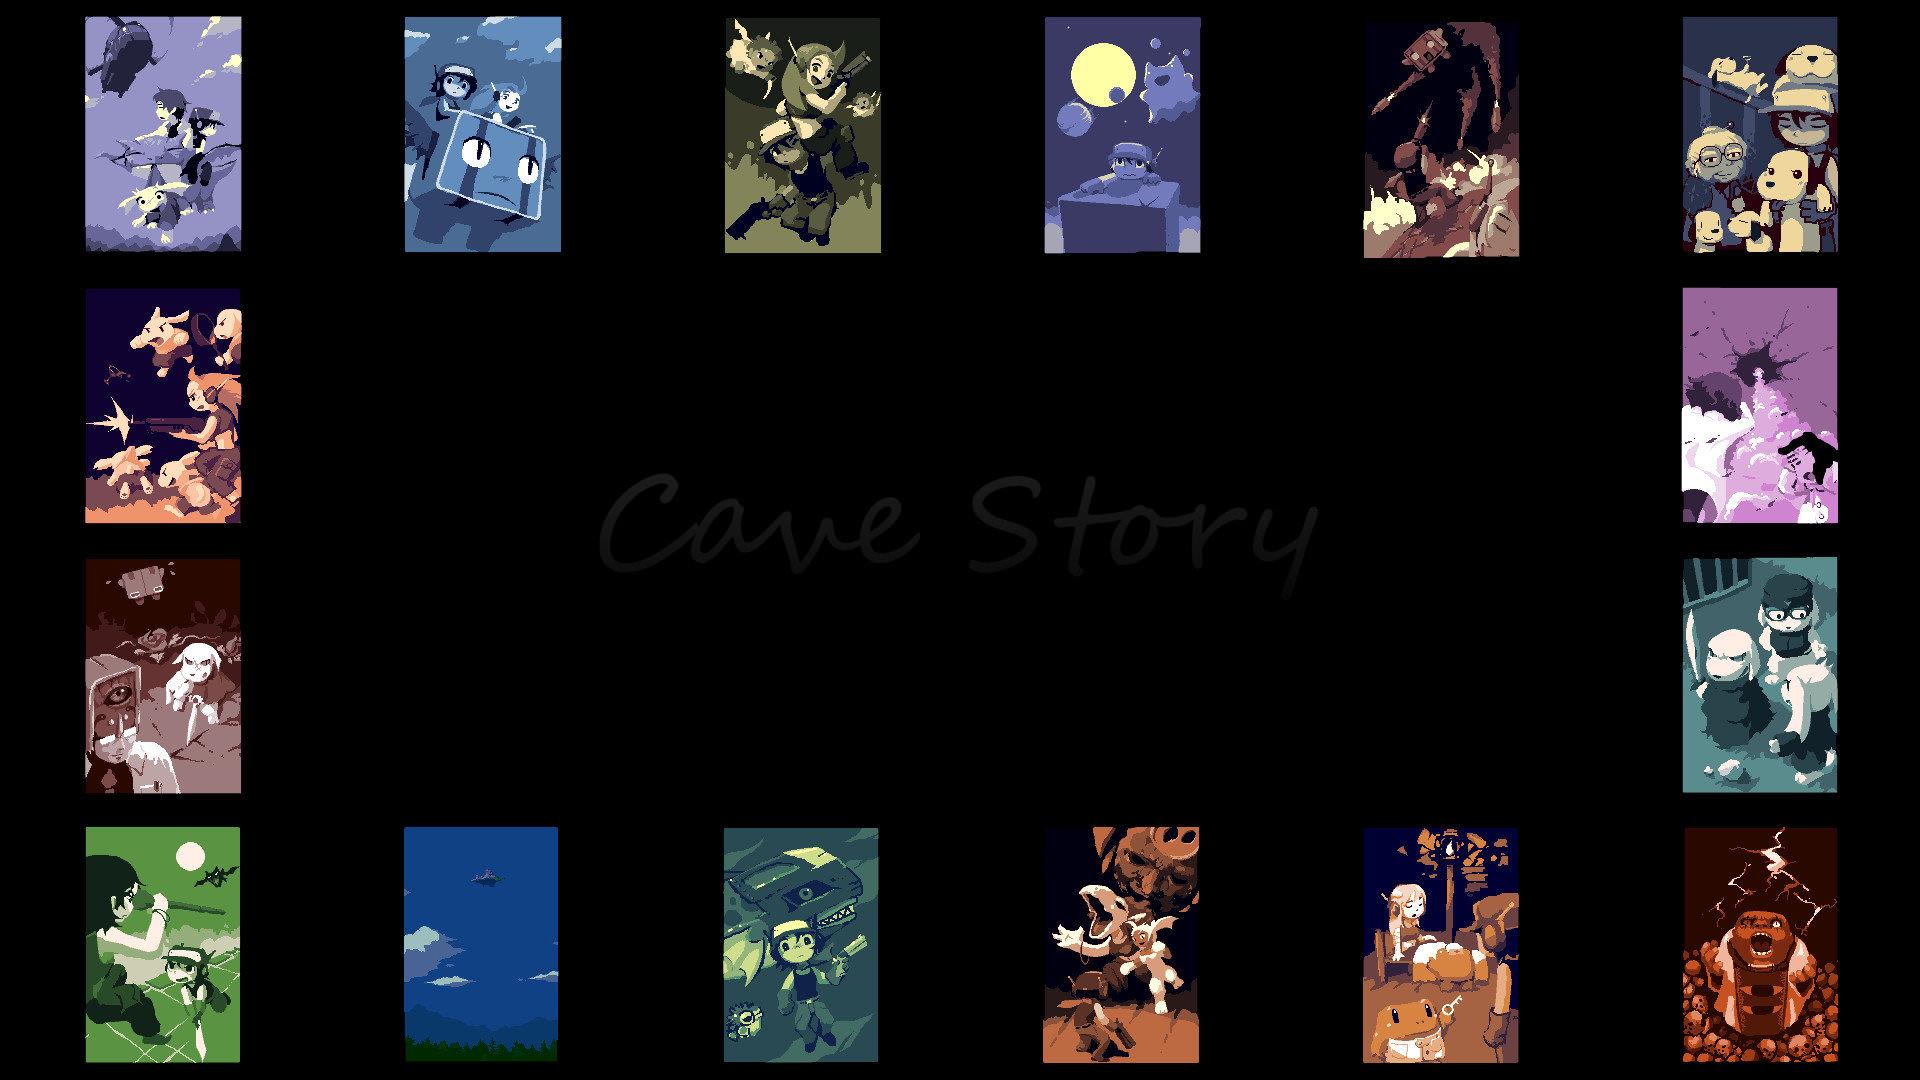 Cave Story wallpaper 1920x1080 Full HD (1080p) desktop background